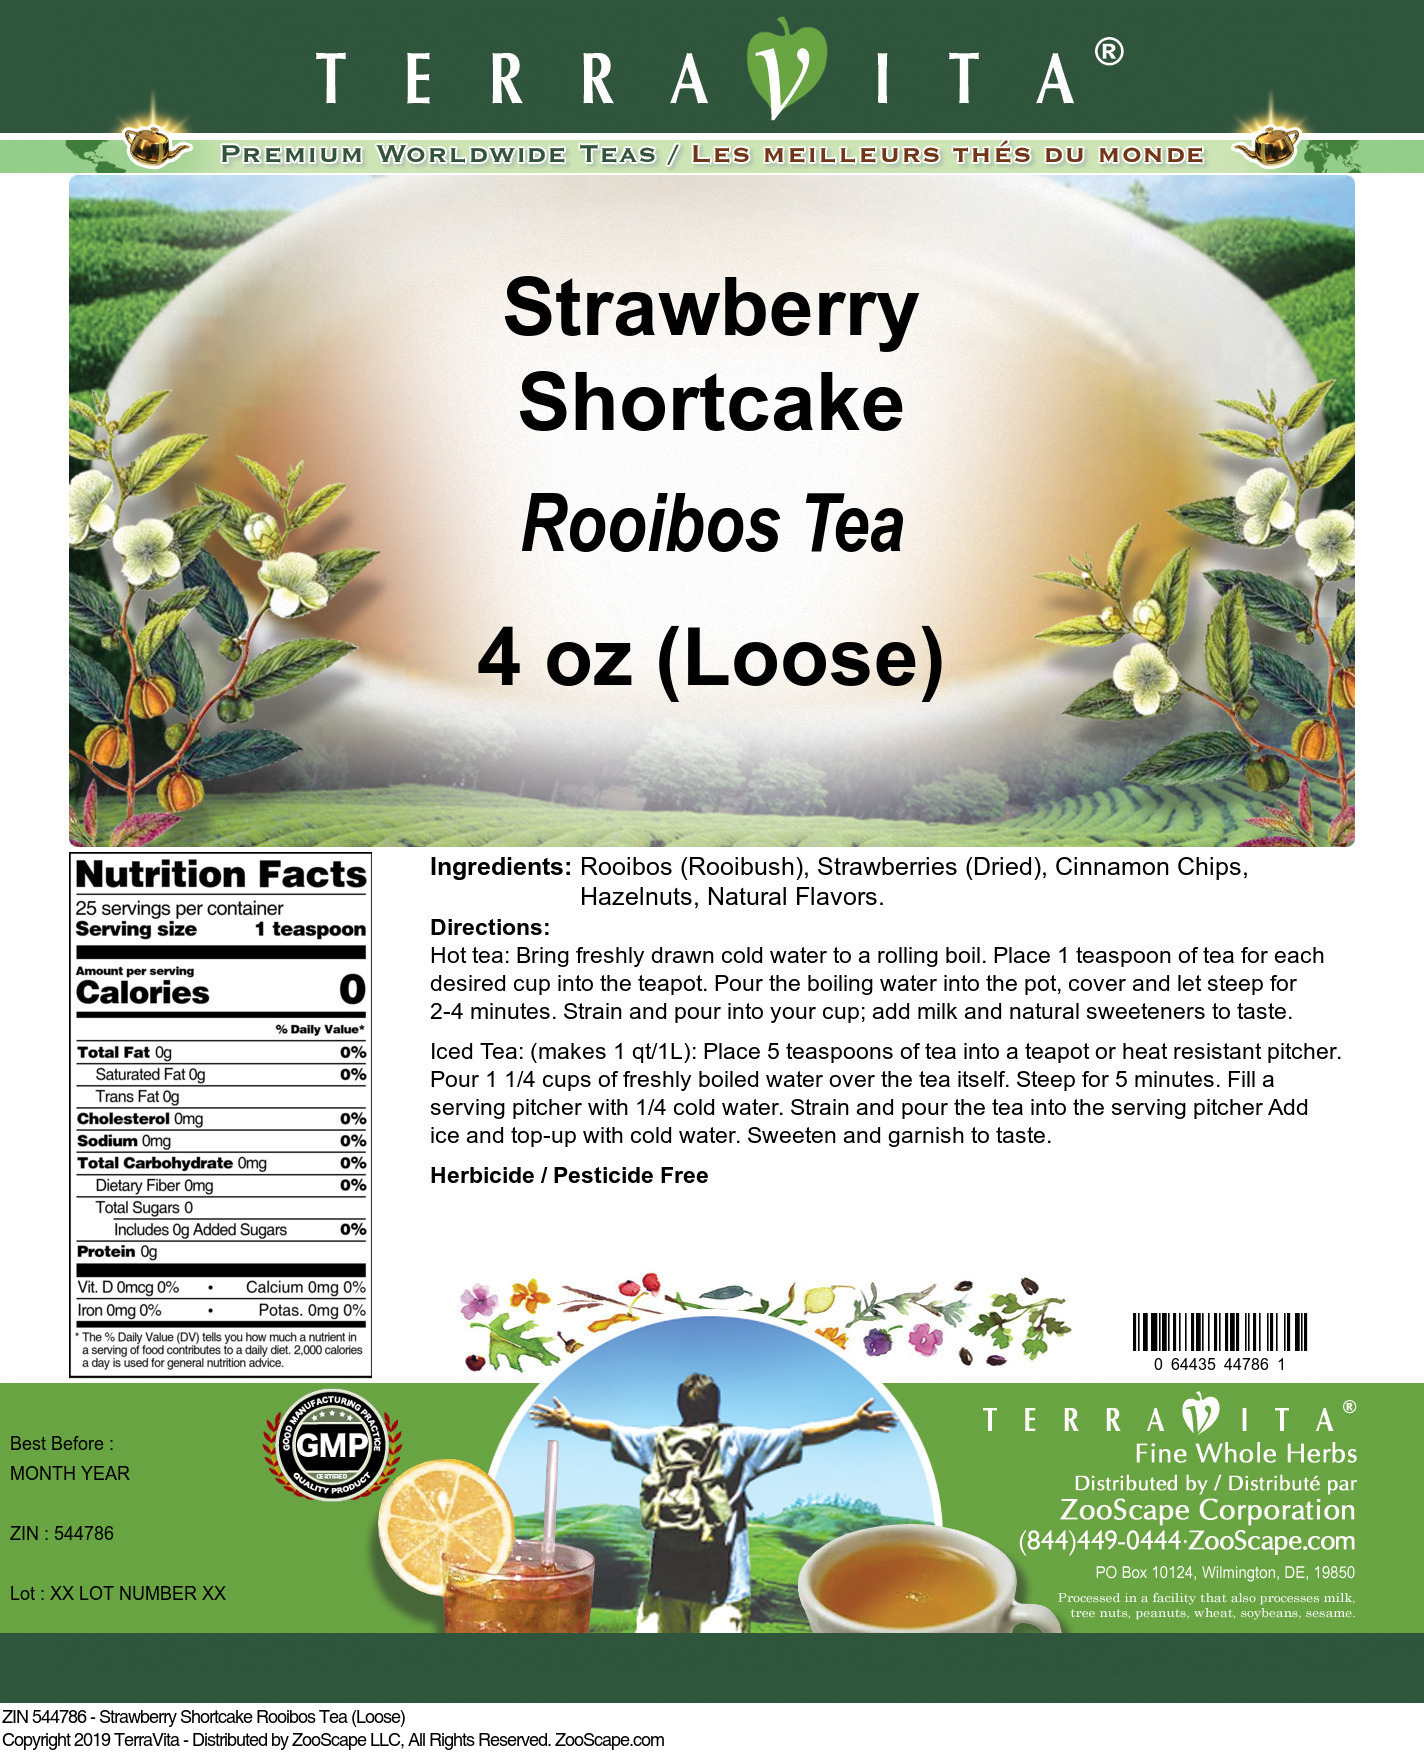 Strawberry Shortcake Rooibos Tea (Loose) - Label